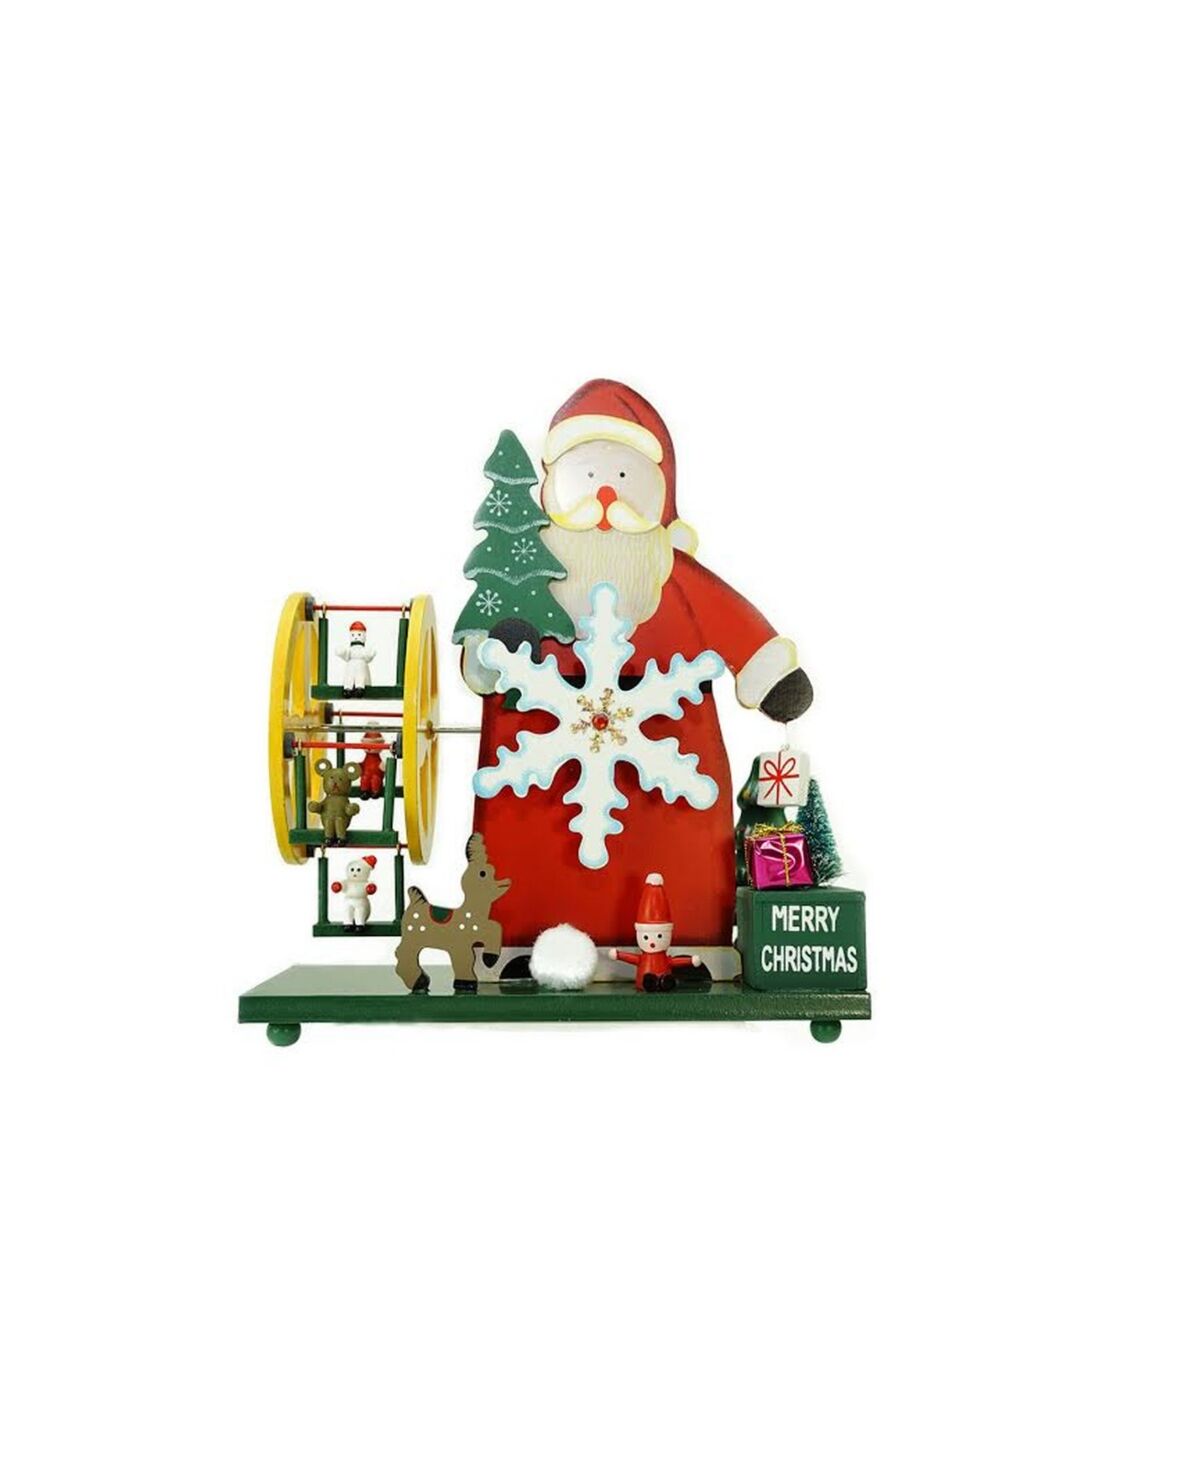 Northlight Santa Claus Wonderland Christmas Musical Table top Decor - Red